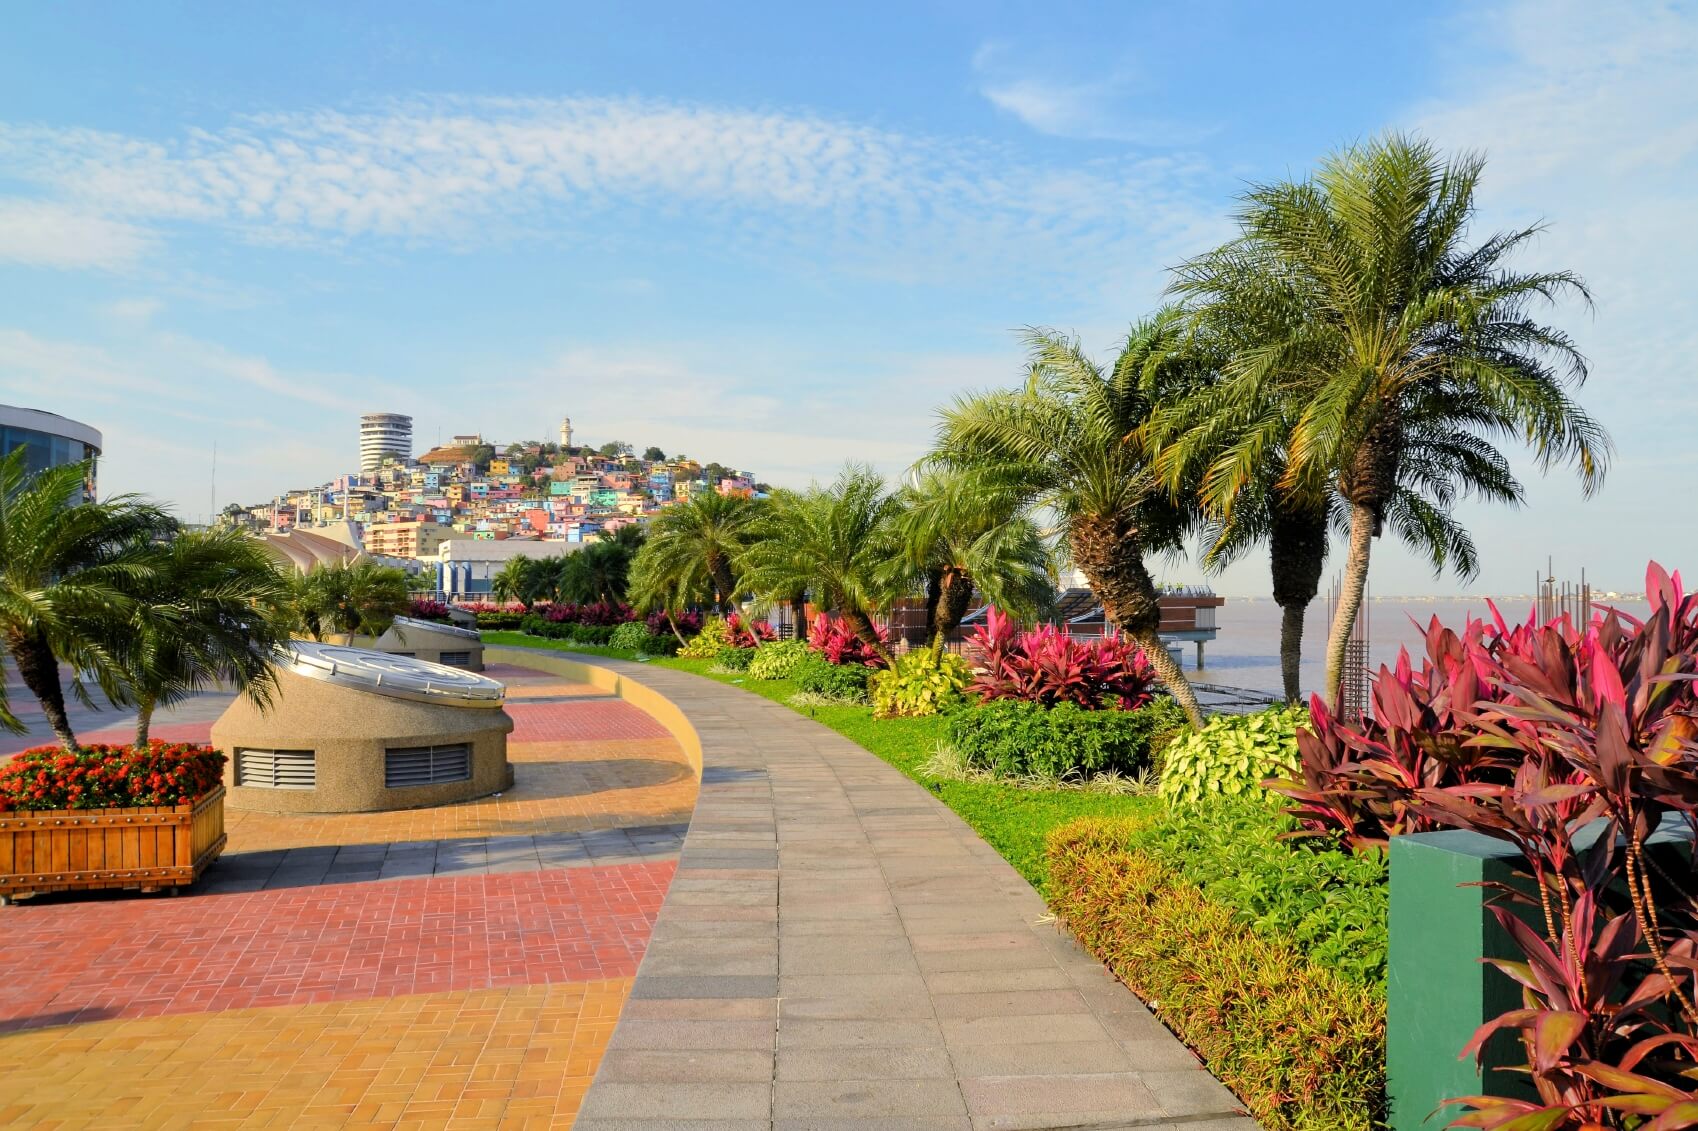 Garden seaside Malecon 2000 park and pedestrian walkway with Santa Ana Hill in background, Ecuador